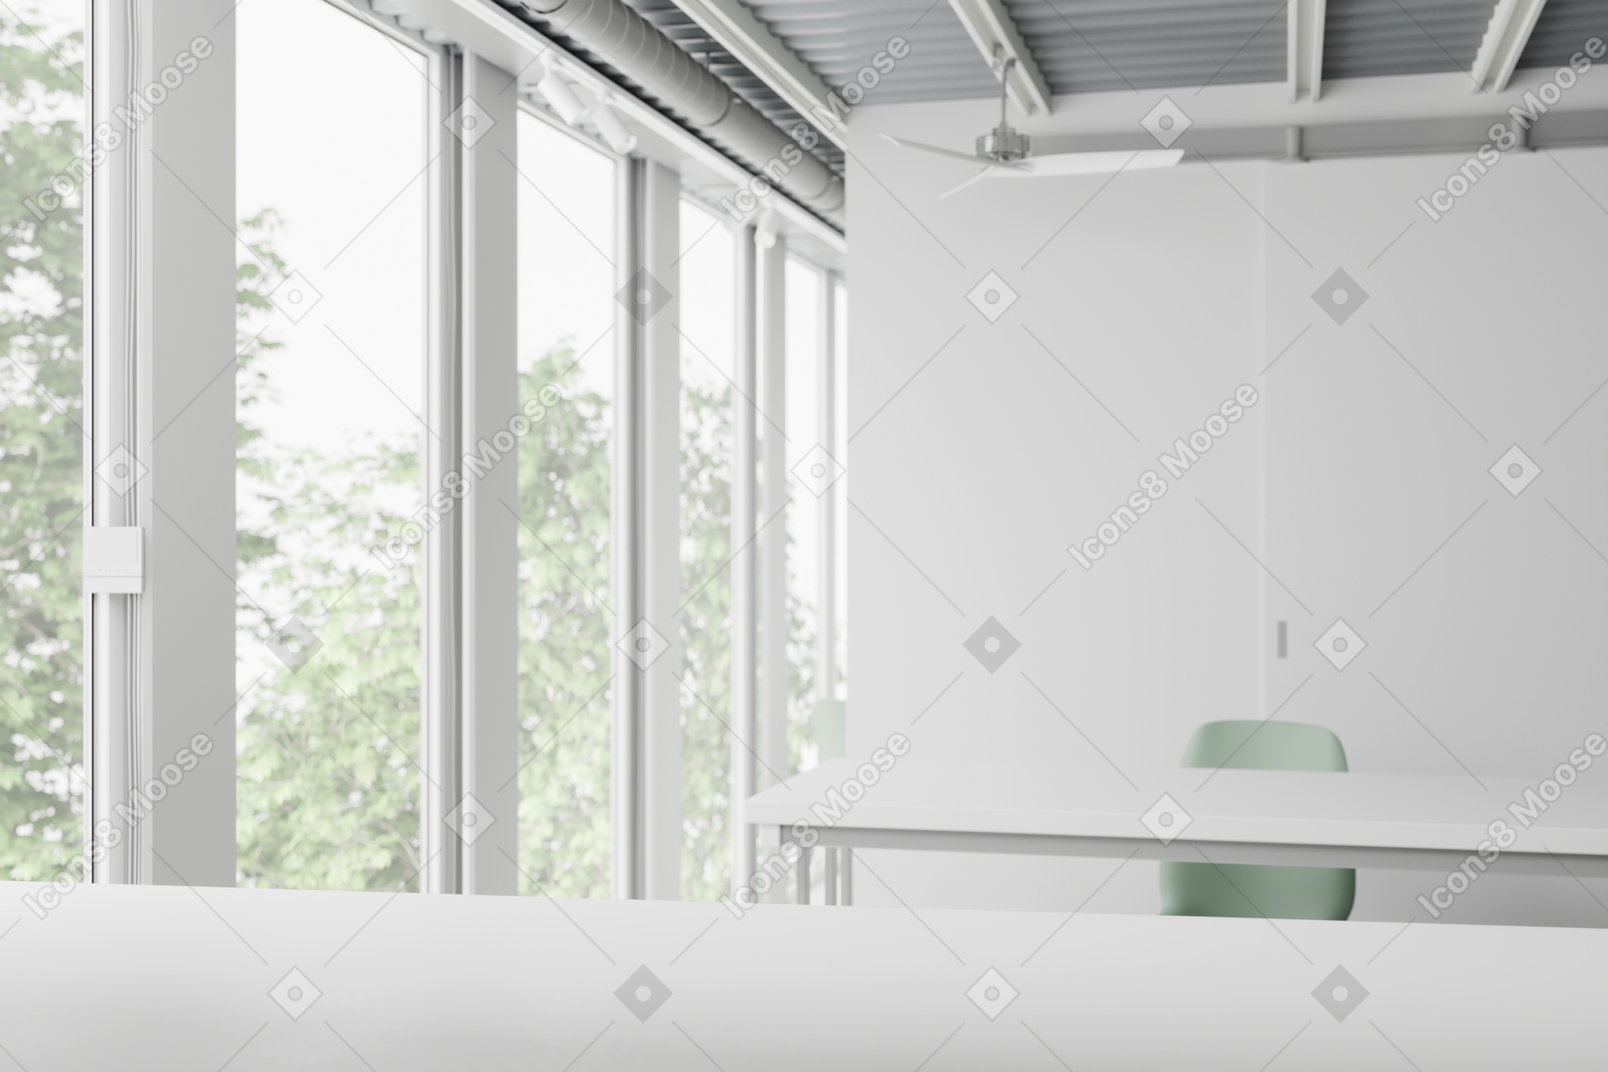 Classroom with white desks